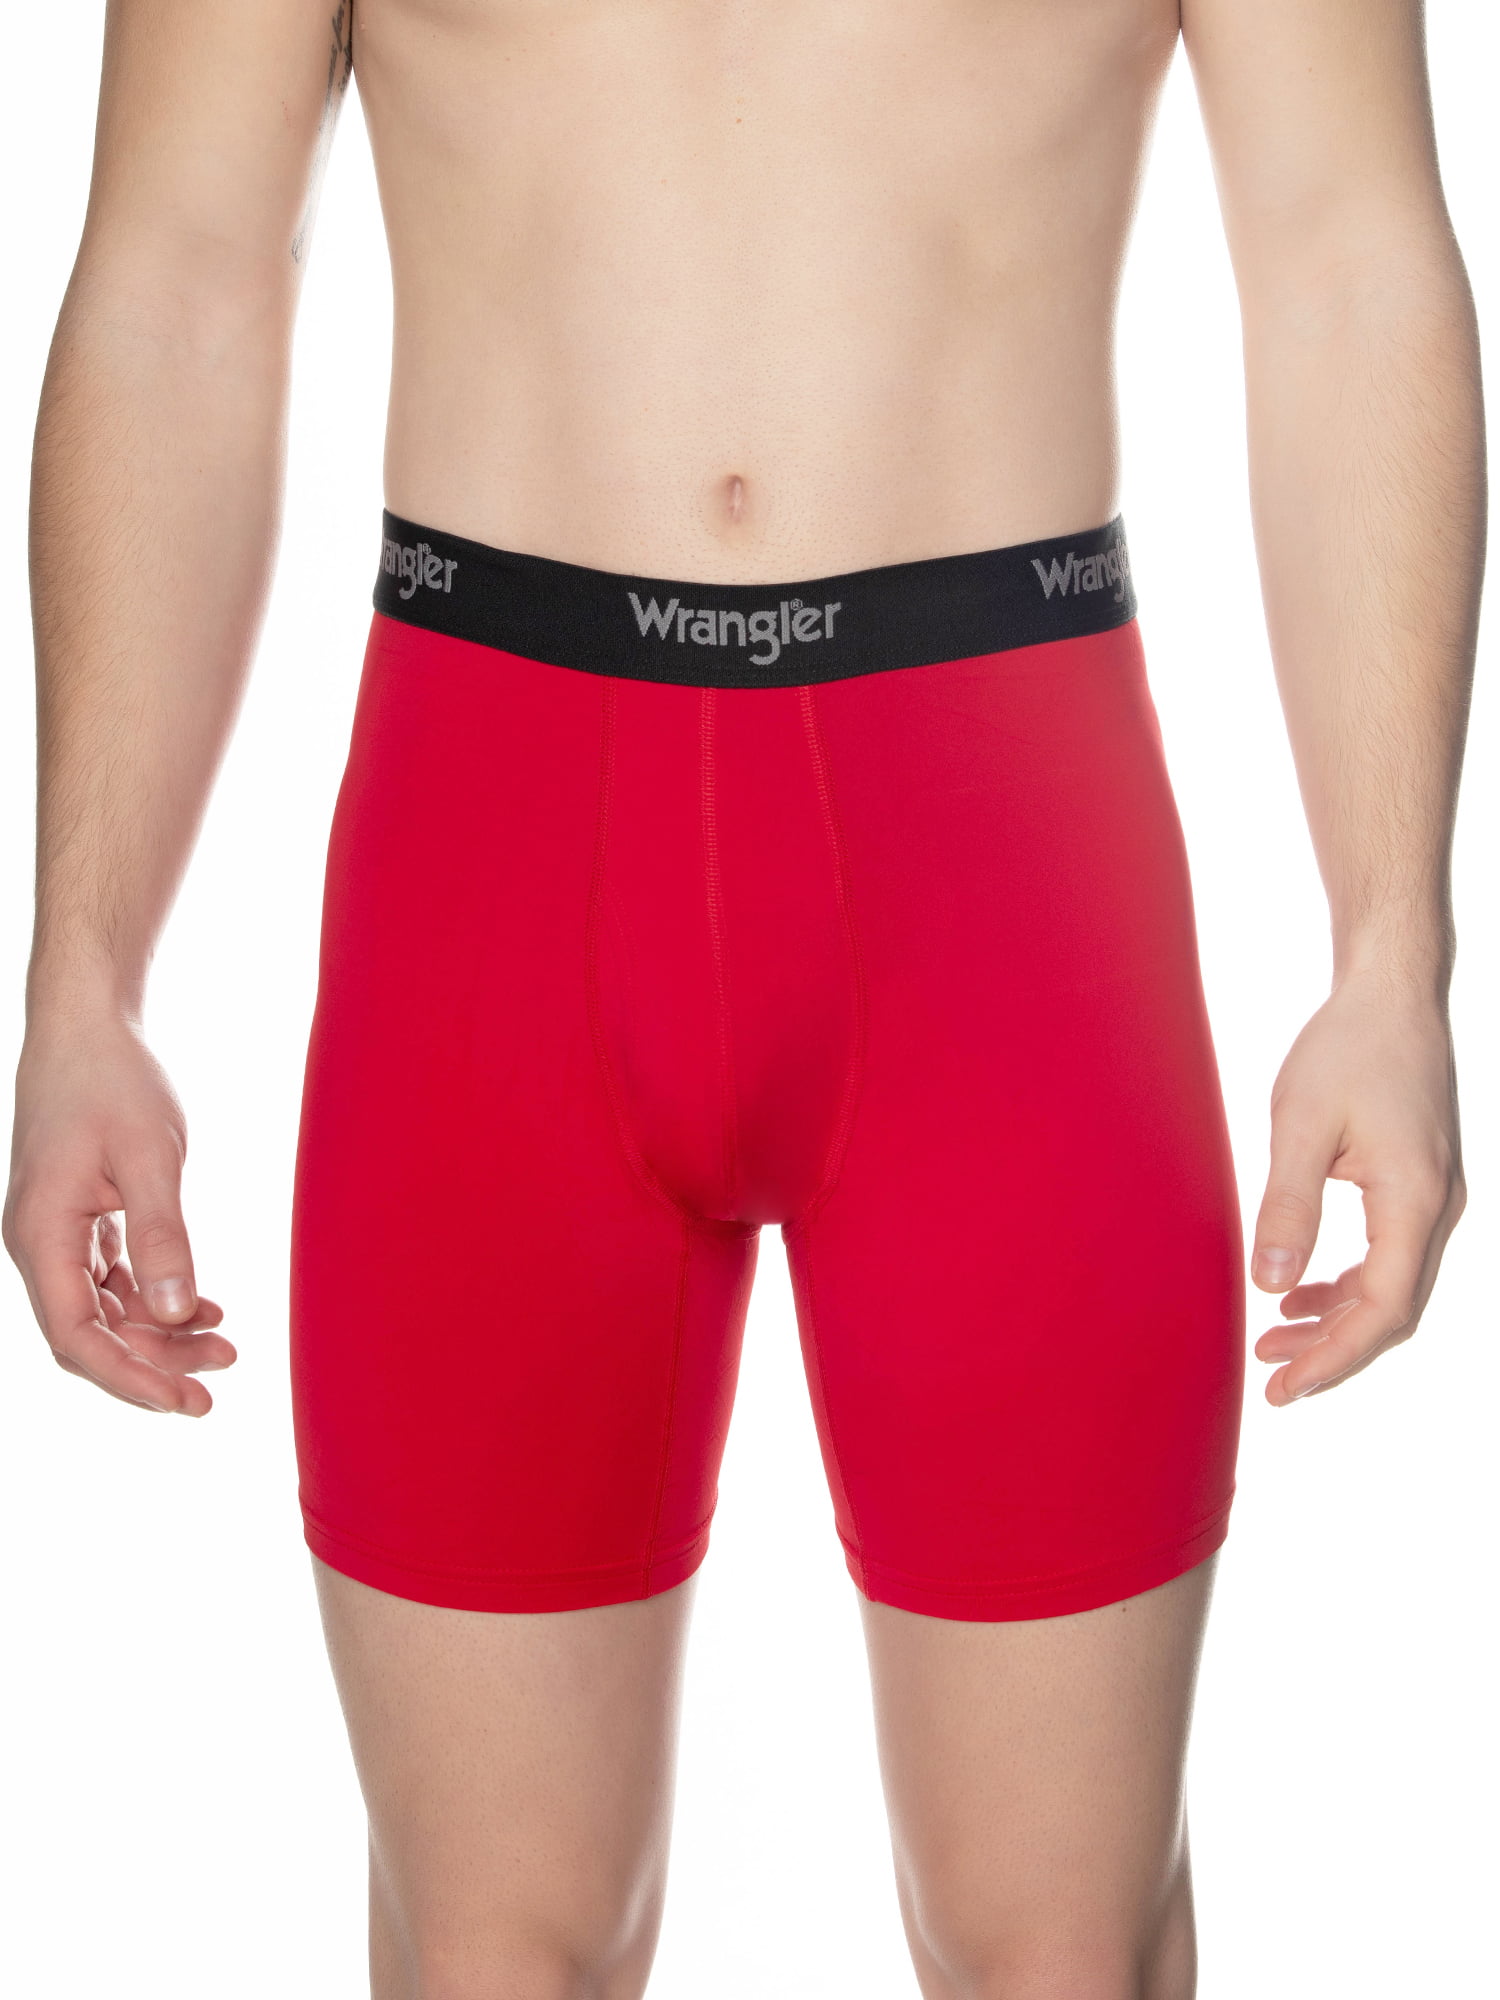 Wrangler Men S Cooling Stretch Boxer Briefs Underwear 3 Pack